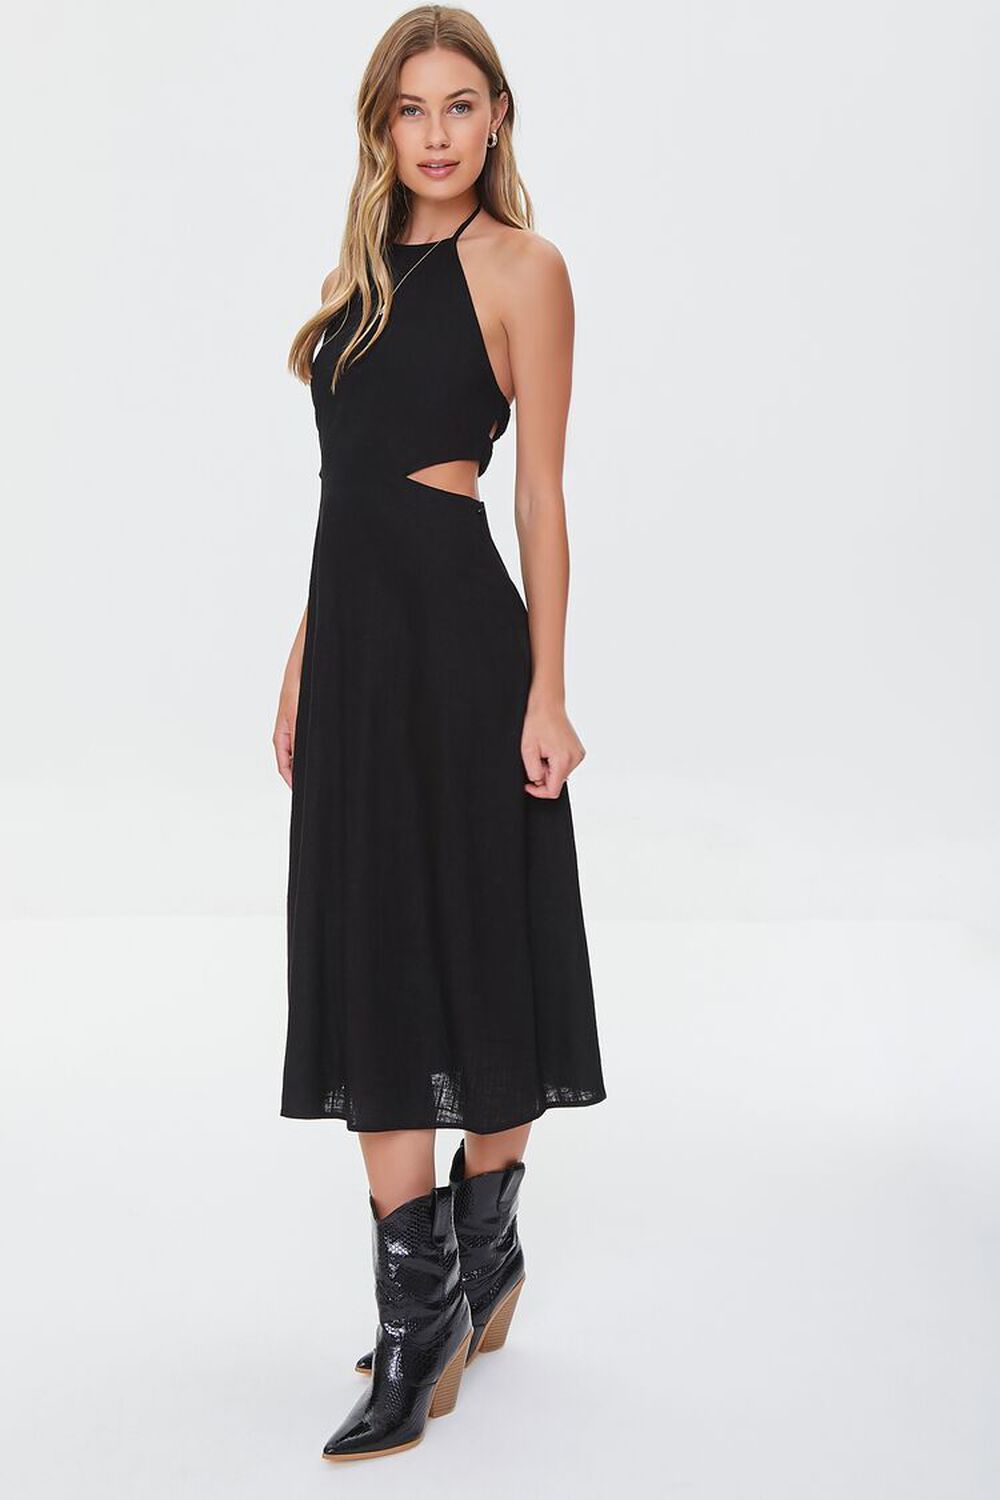 BLACK Cutout Self-Tie Halter Dress, image 2